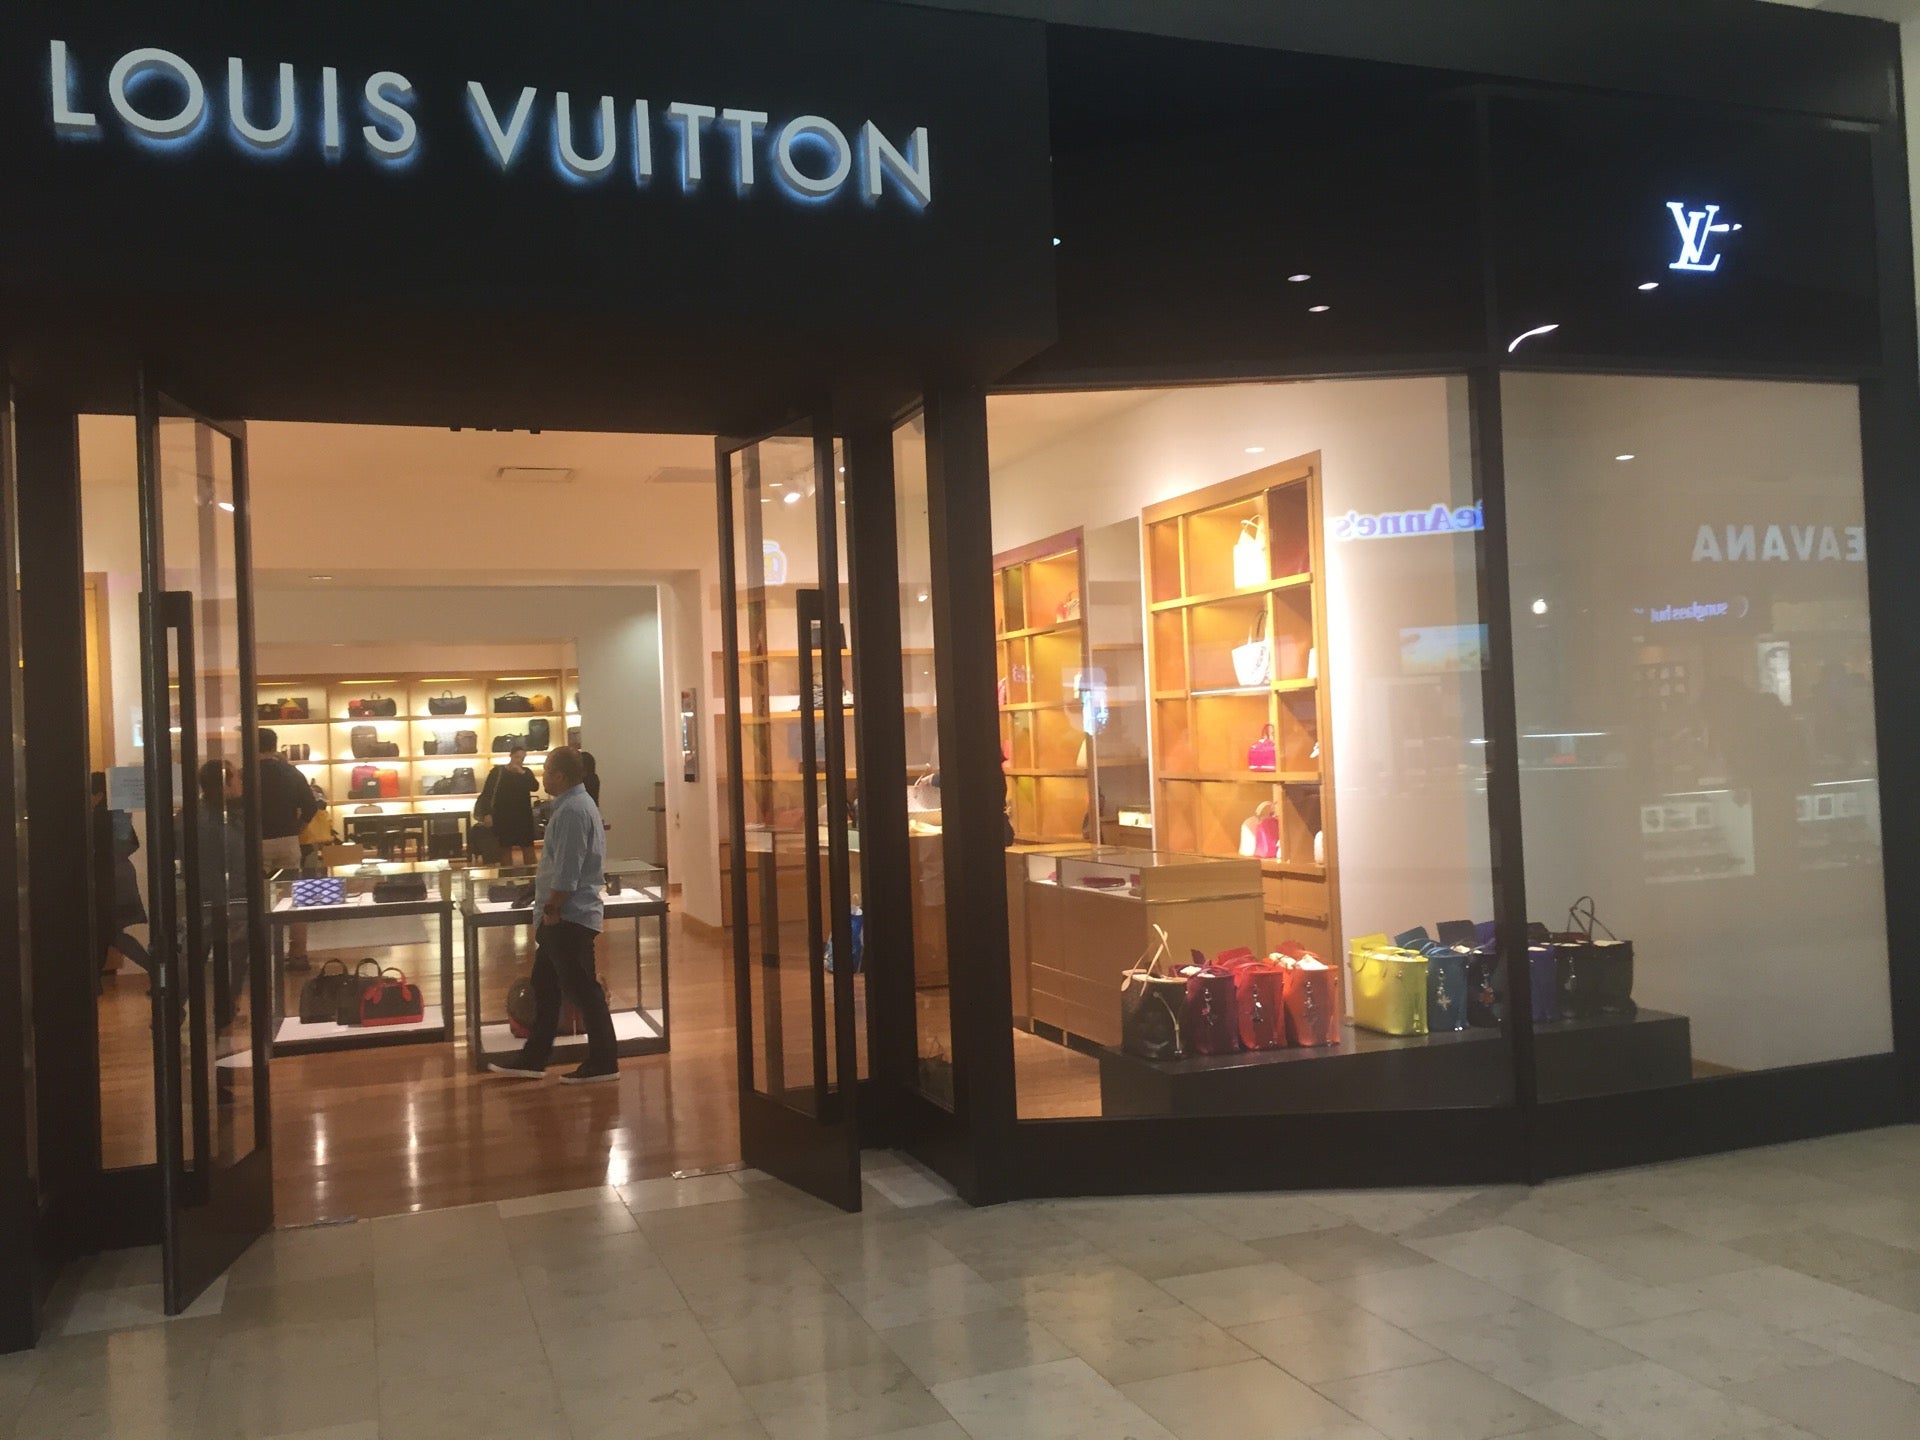 Louis Vuitton Charlotte SouthPark, 4400 Sharon Road, SouthPark